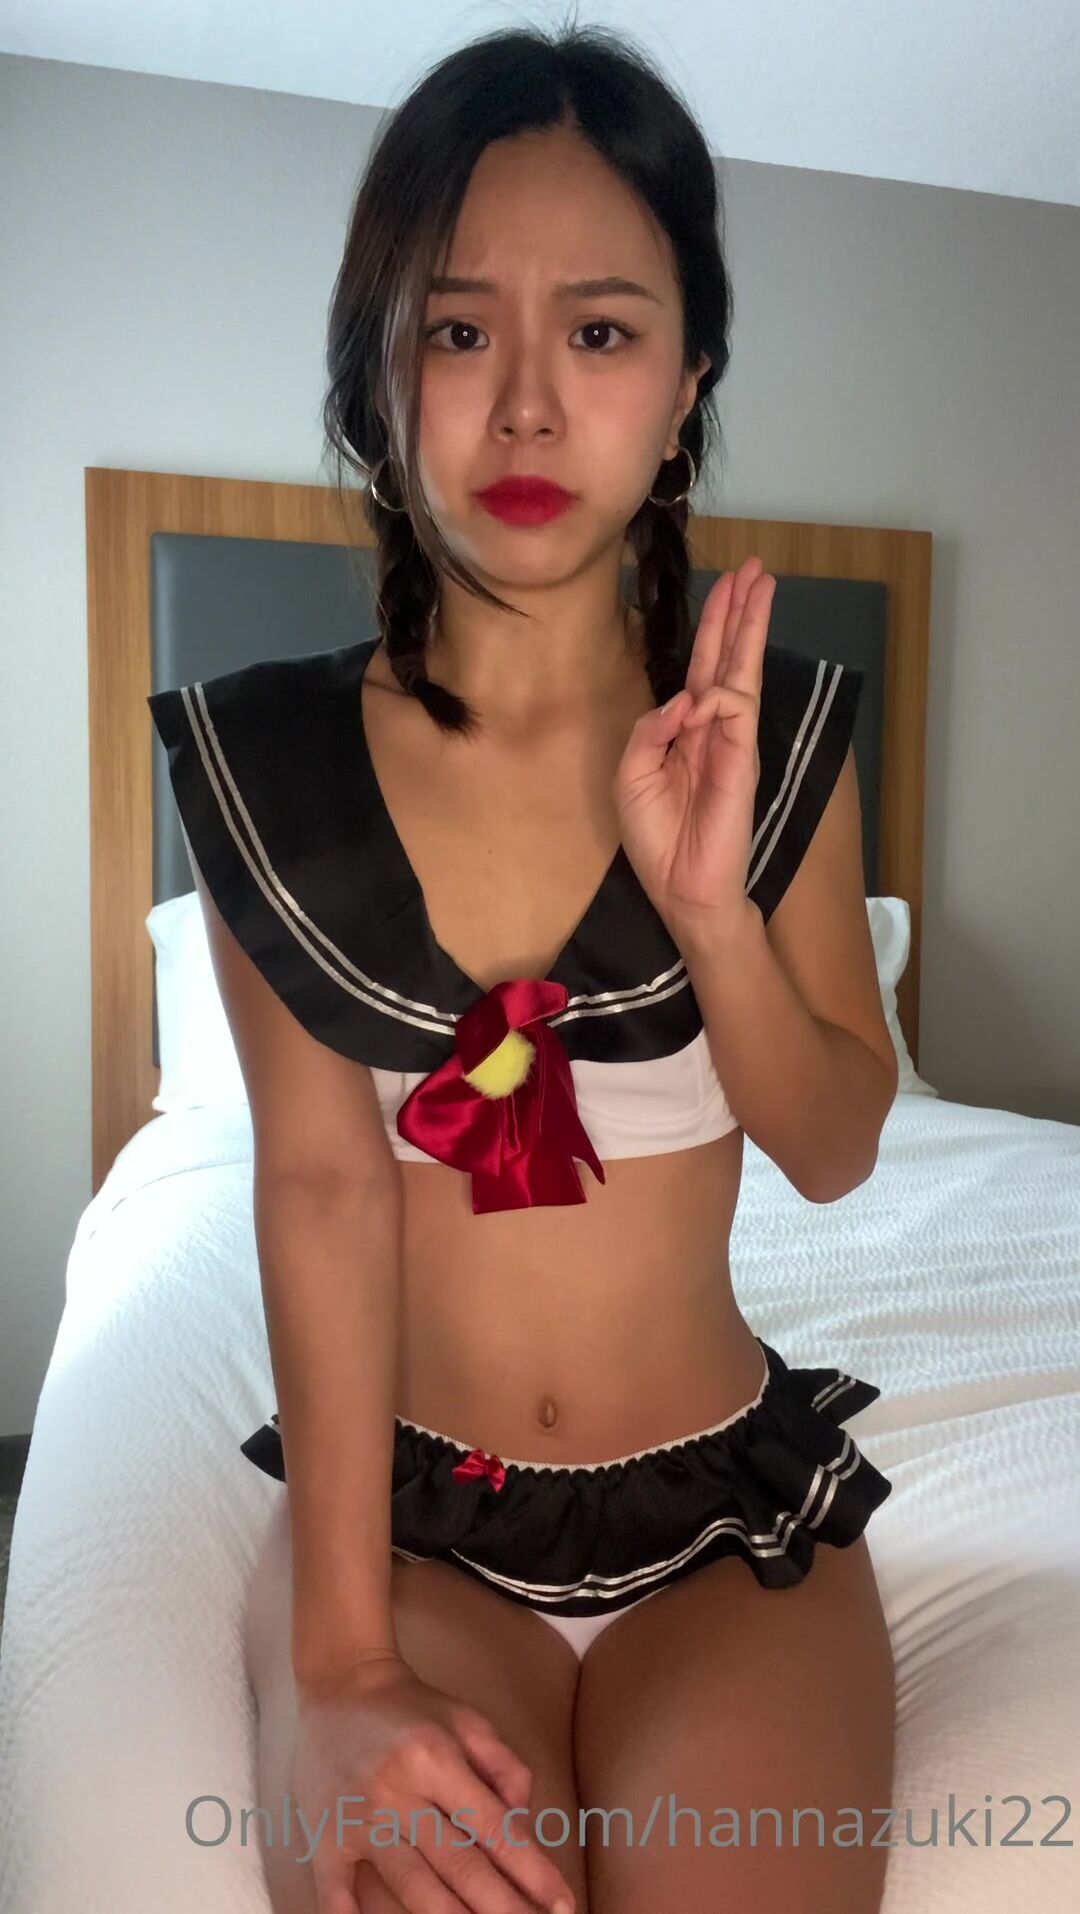 Hannazuki sexy schoolgirl